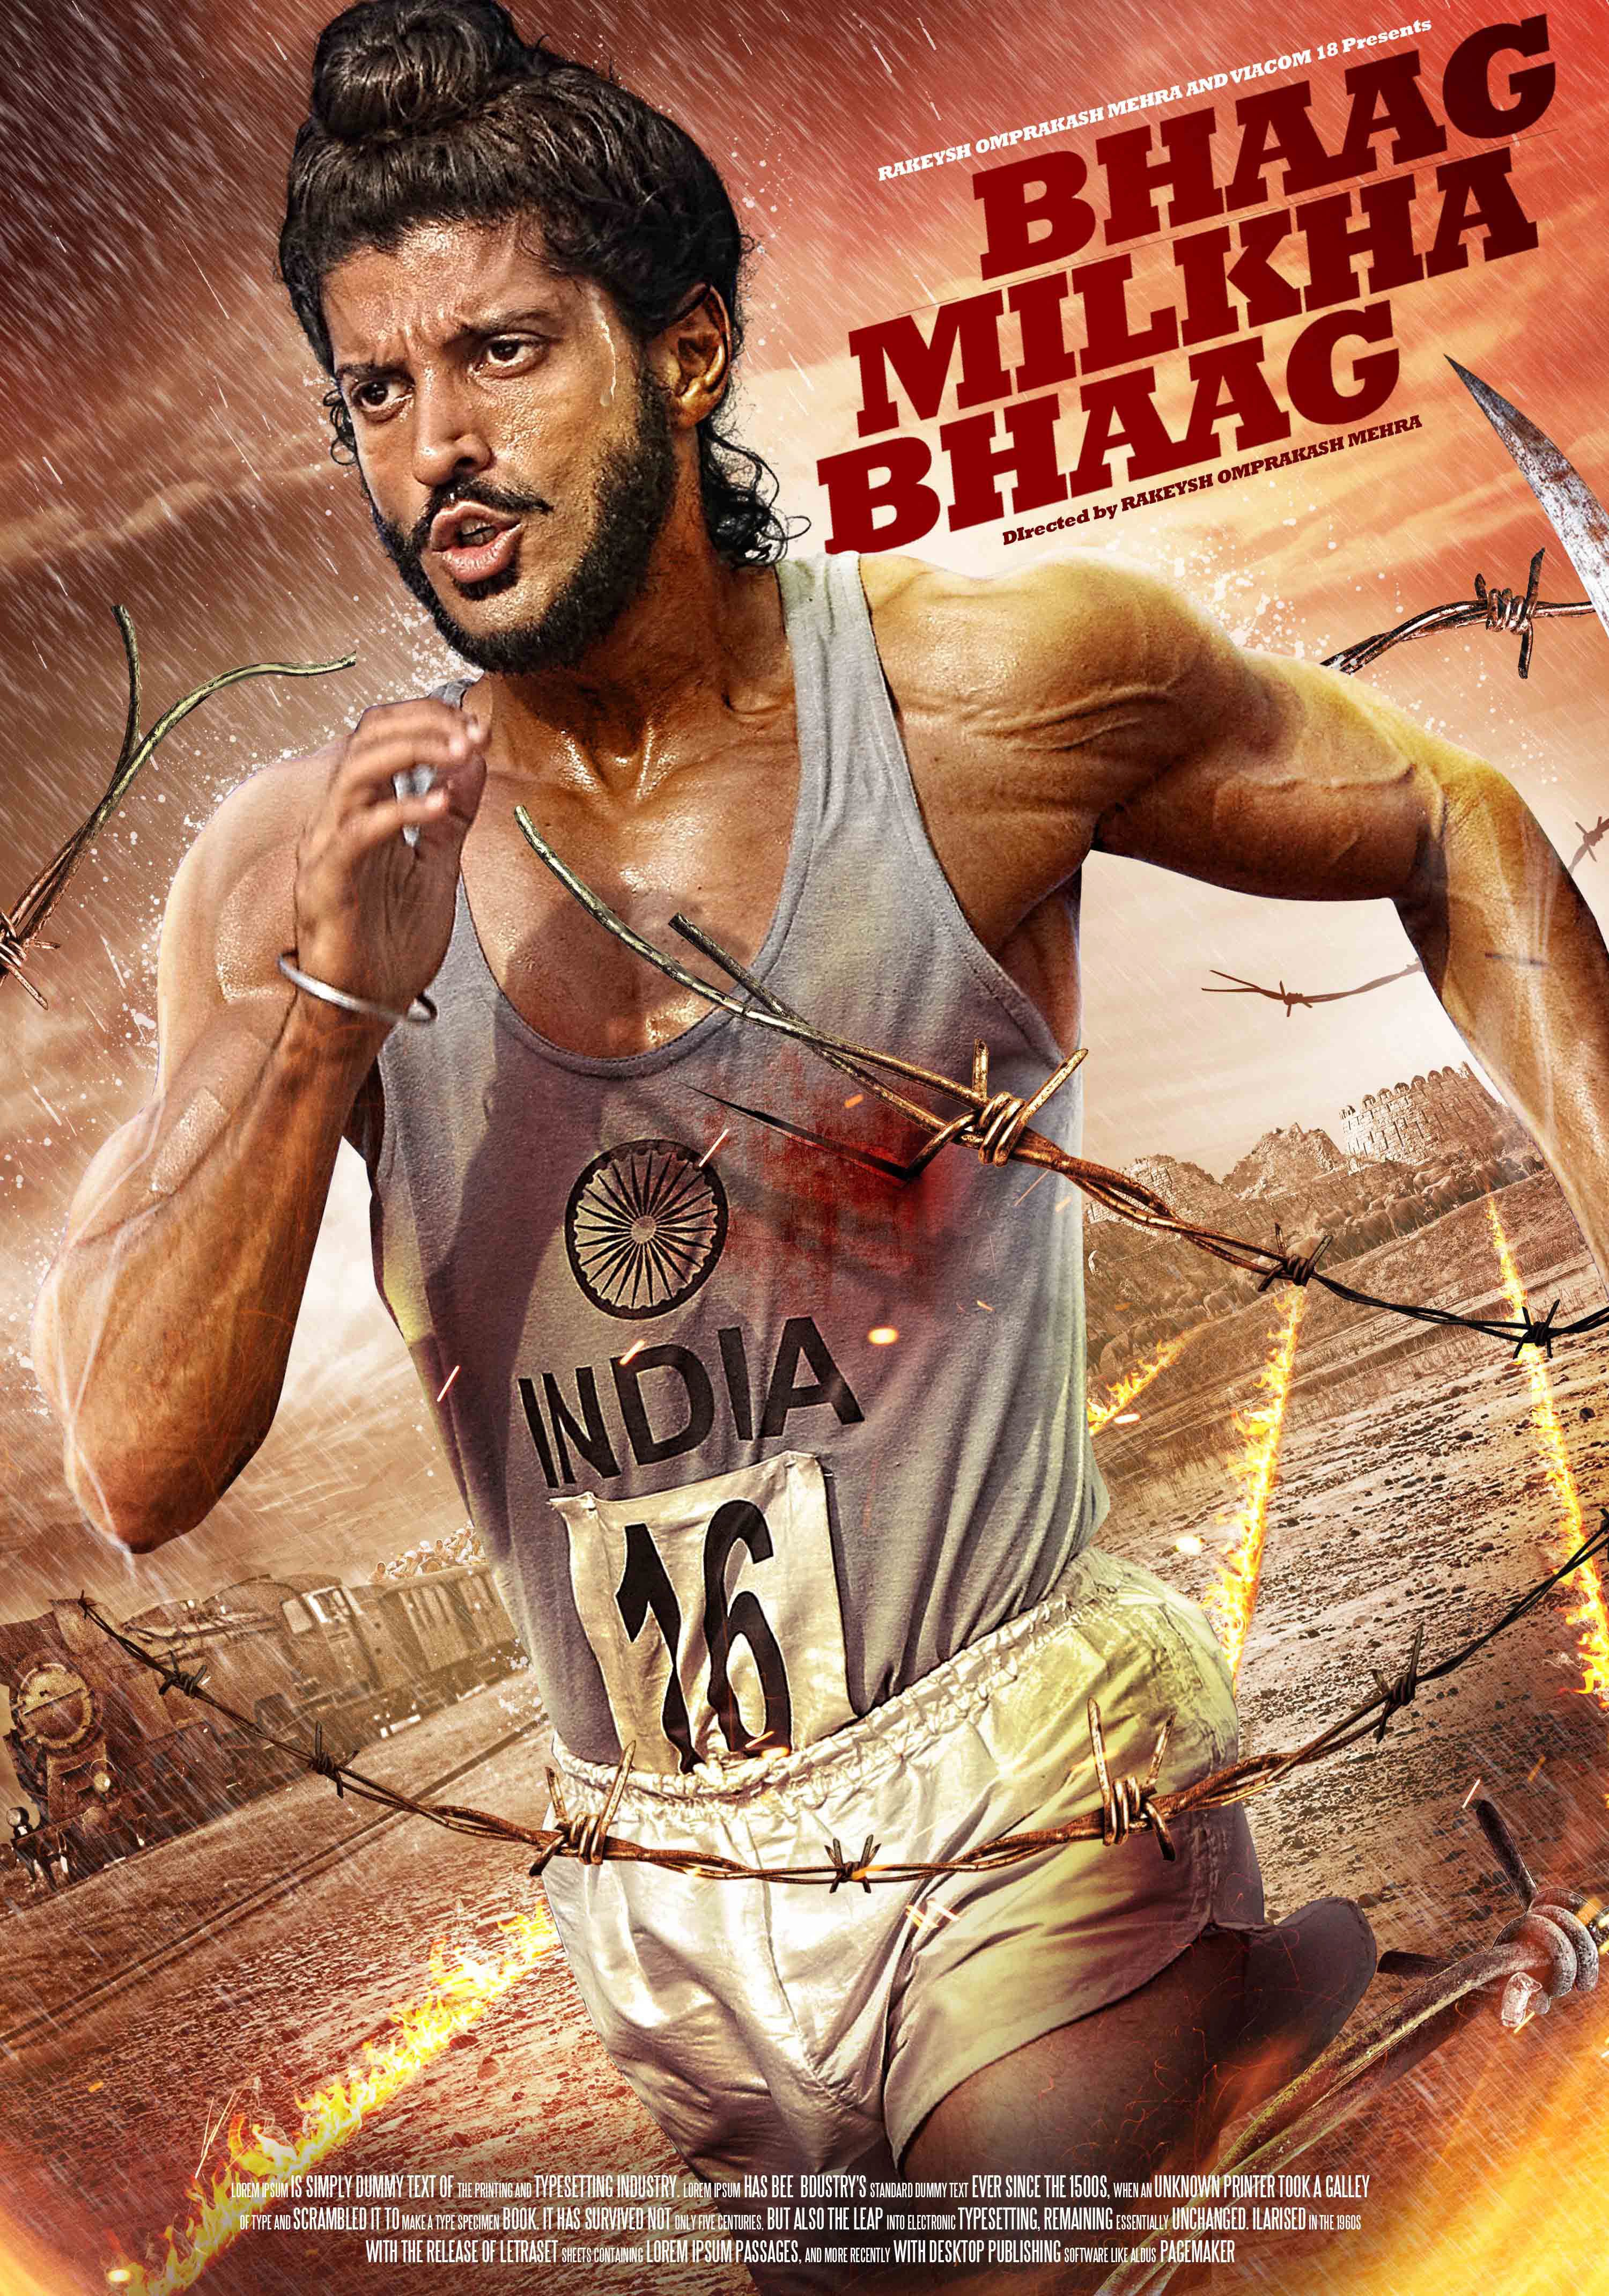 bhag milkha bhag movie 1080p download